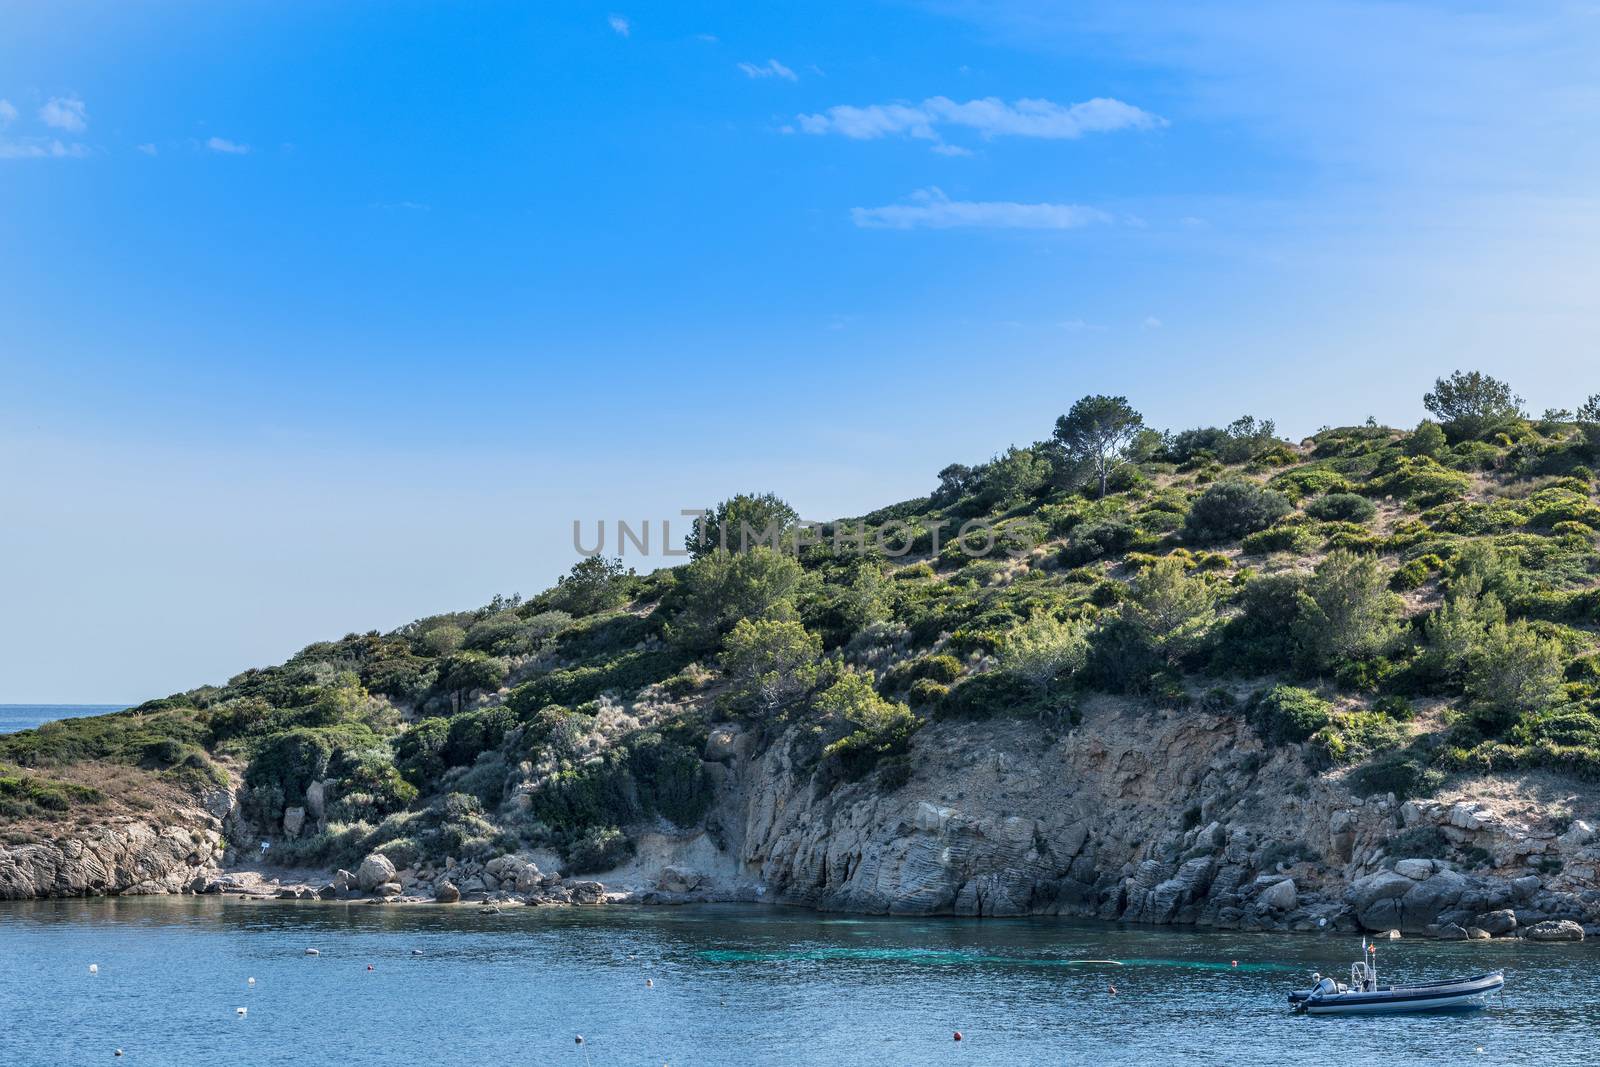 Little rocks in the Mediterranean       by JFsPic